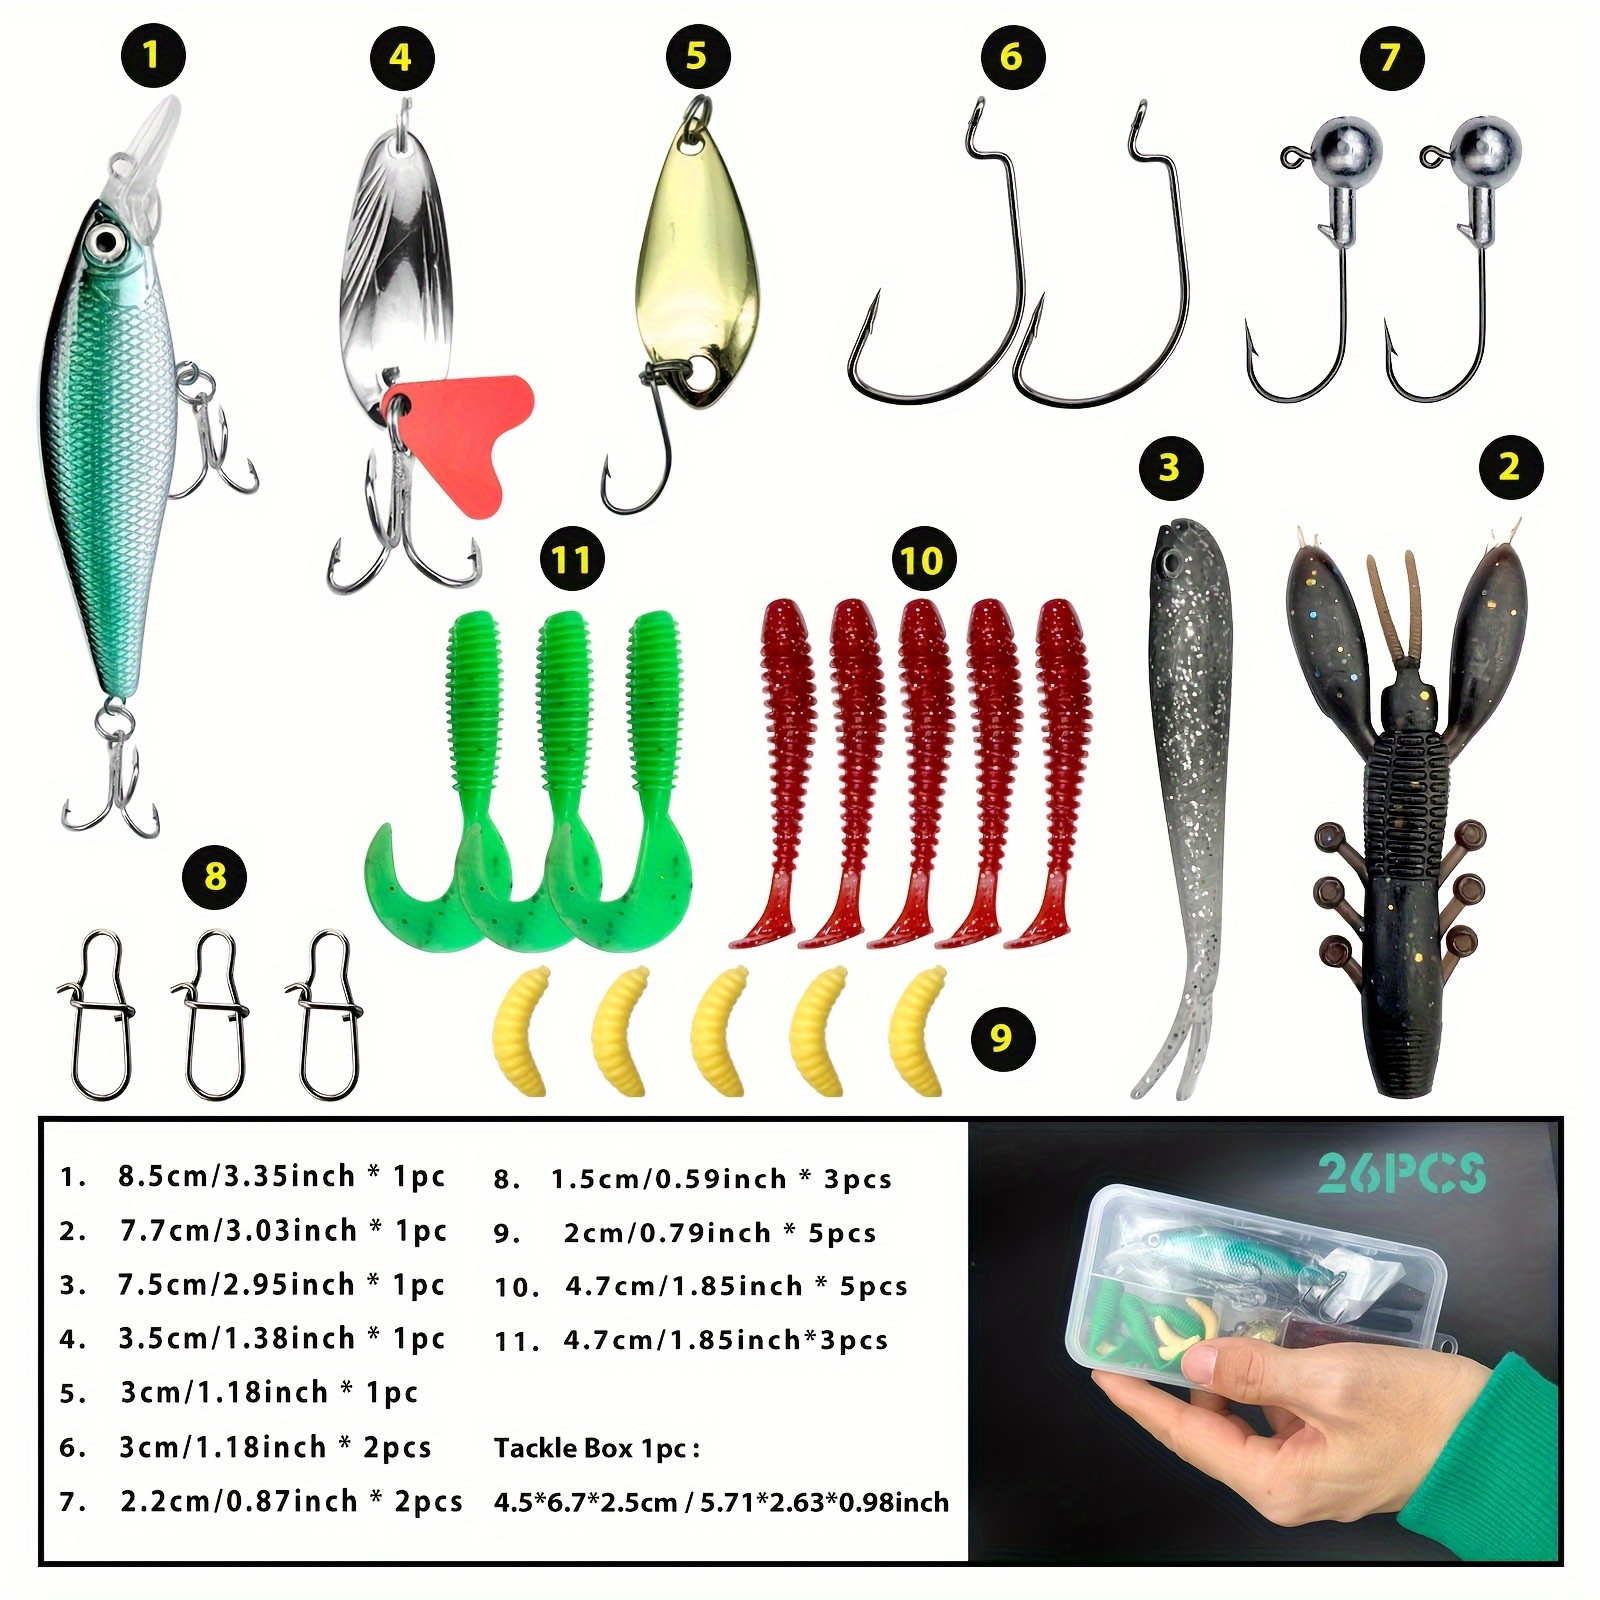 TAIYU Fishing Tackle Box Lure Spoon Bait Hook Accessories tool